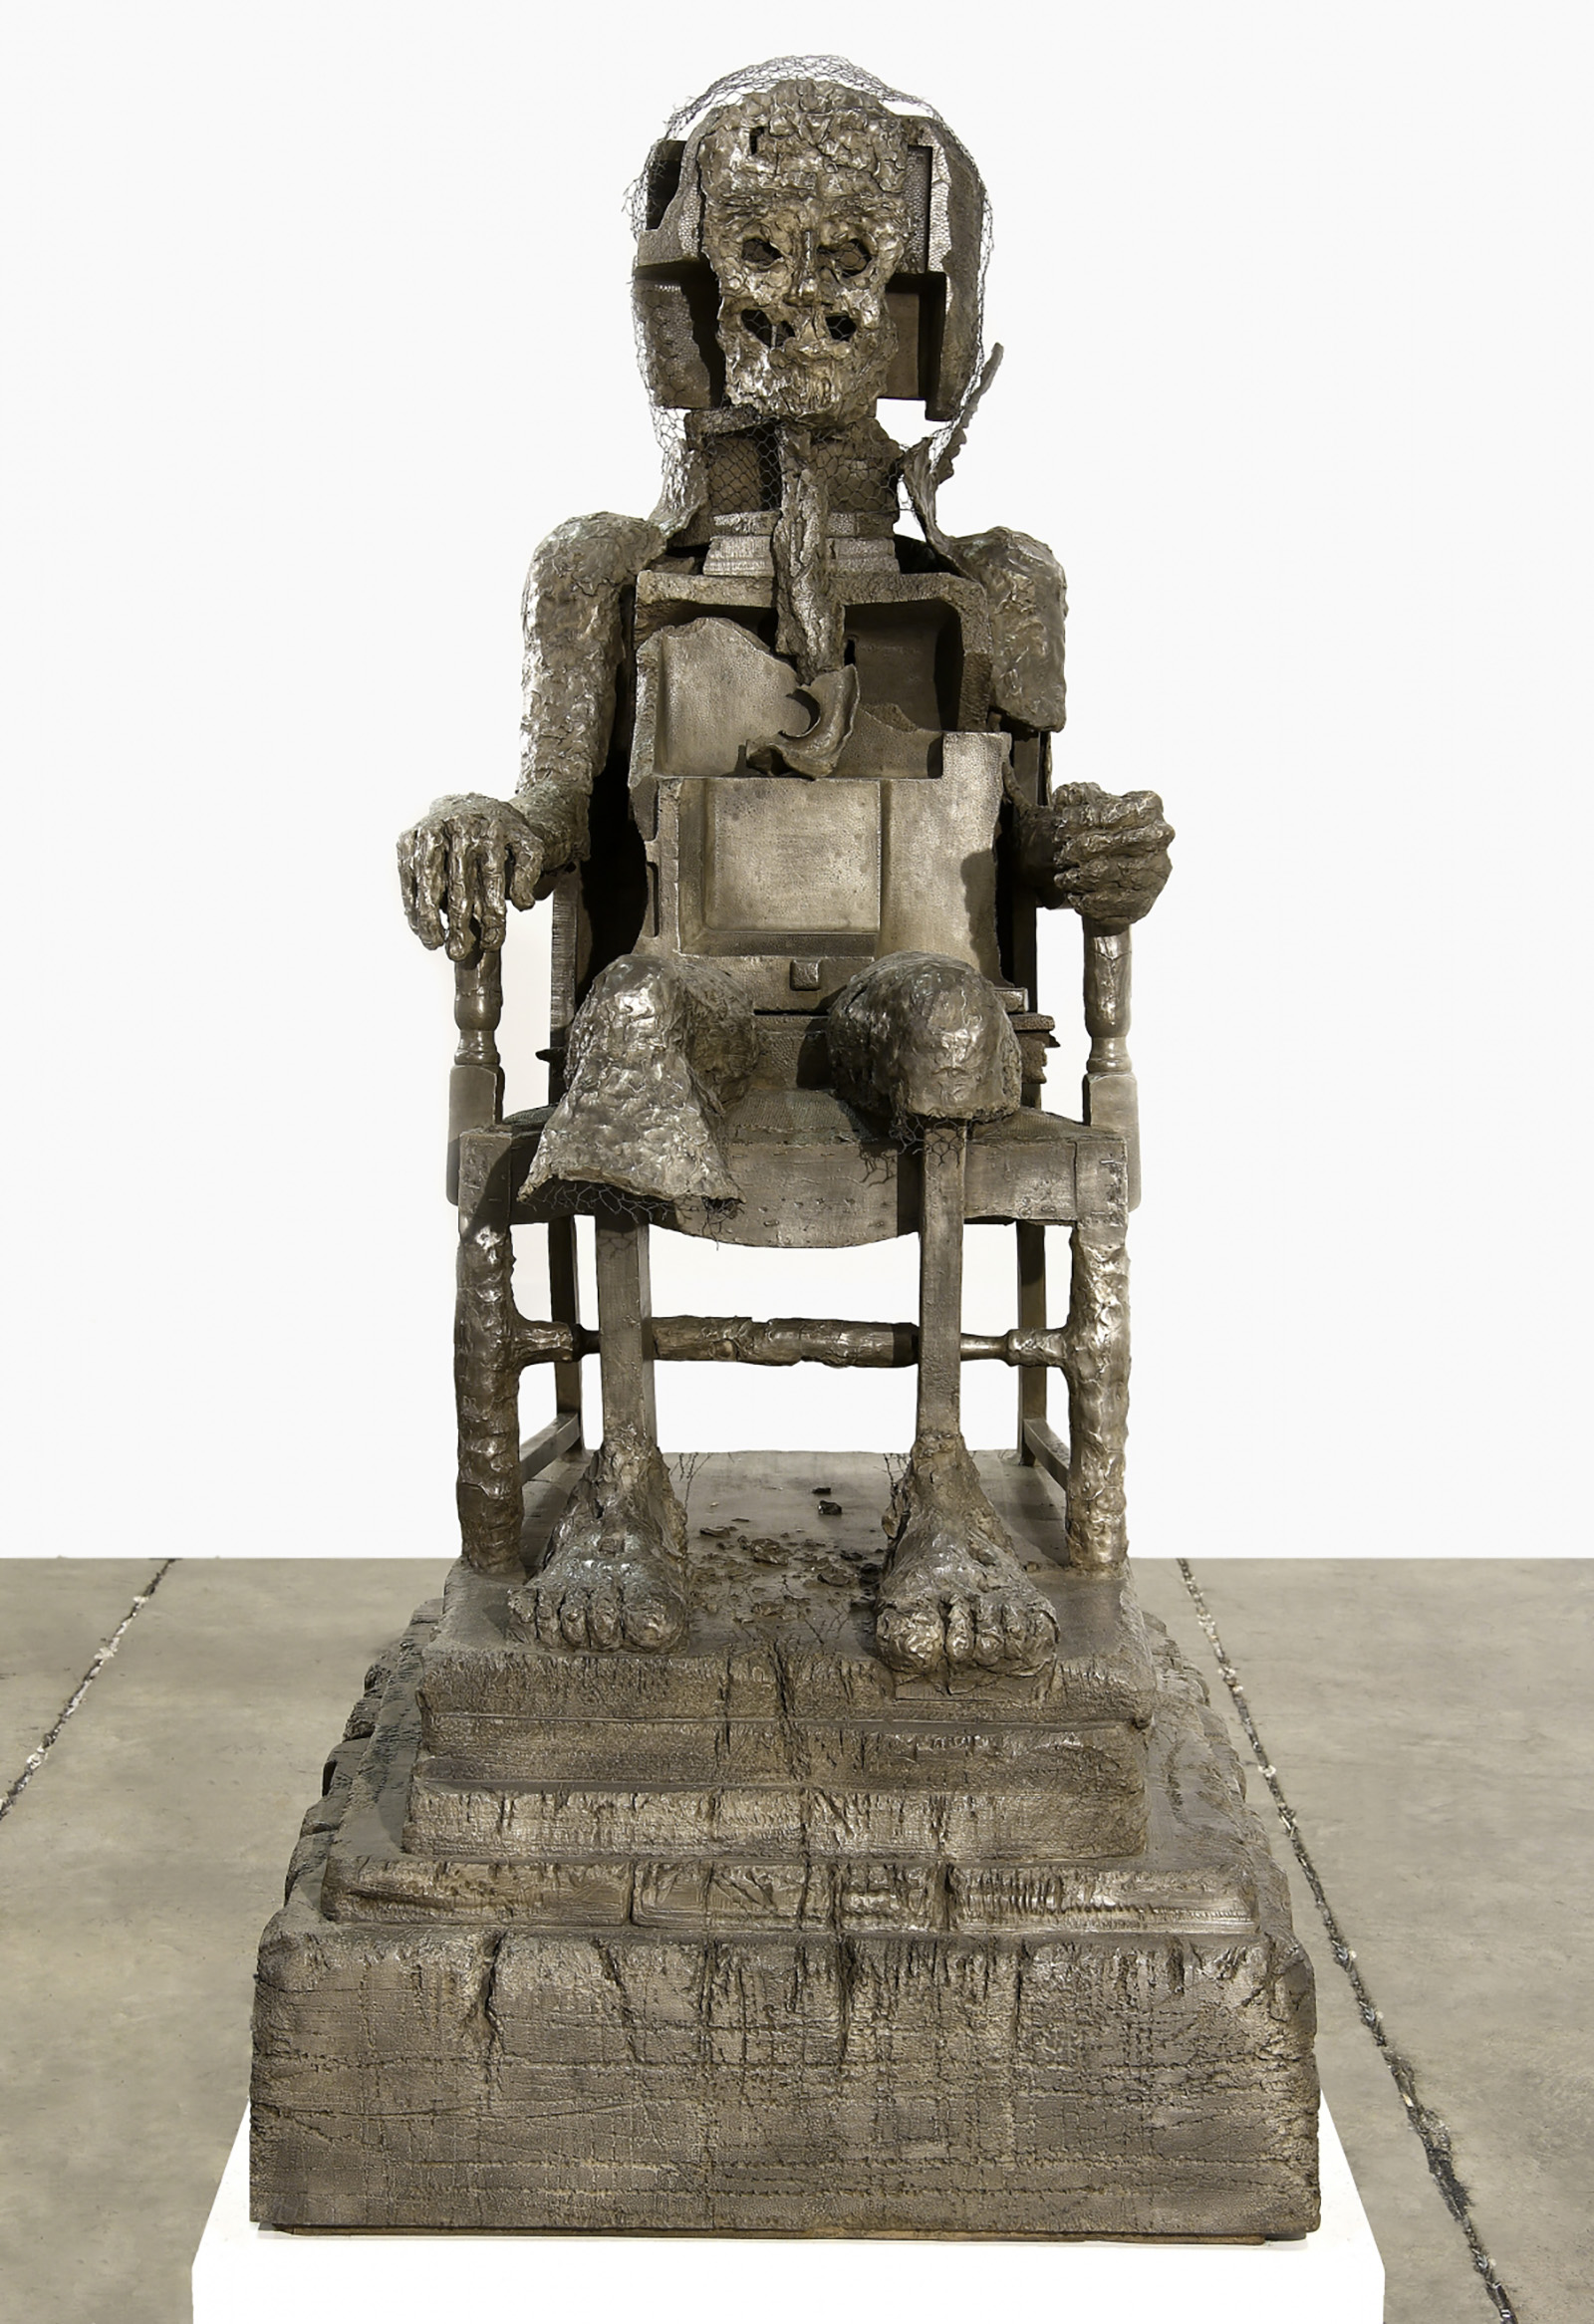 seated figure in bronze by Bhabha